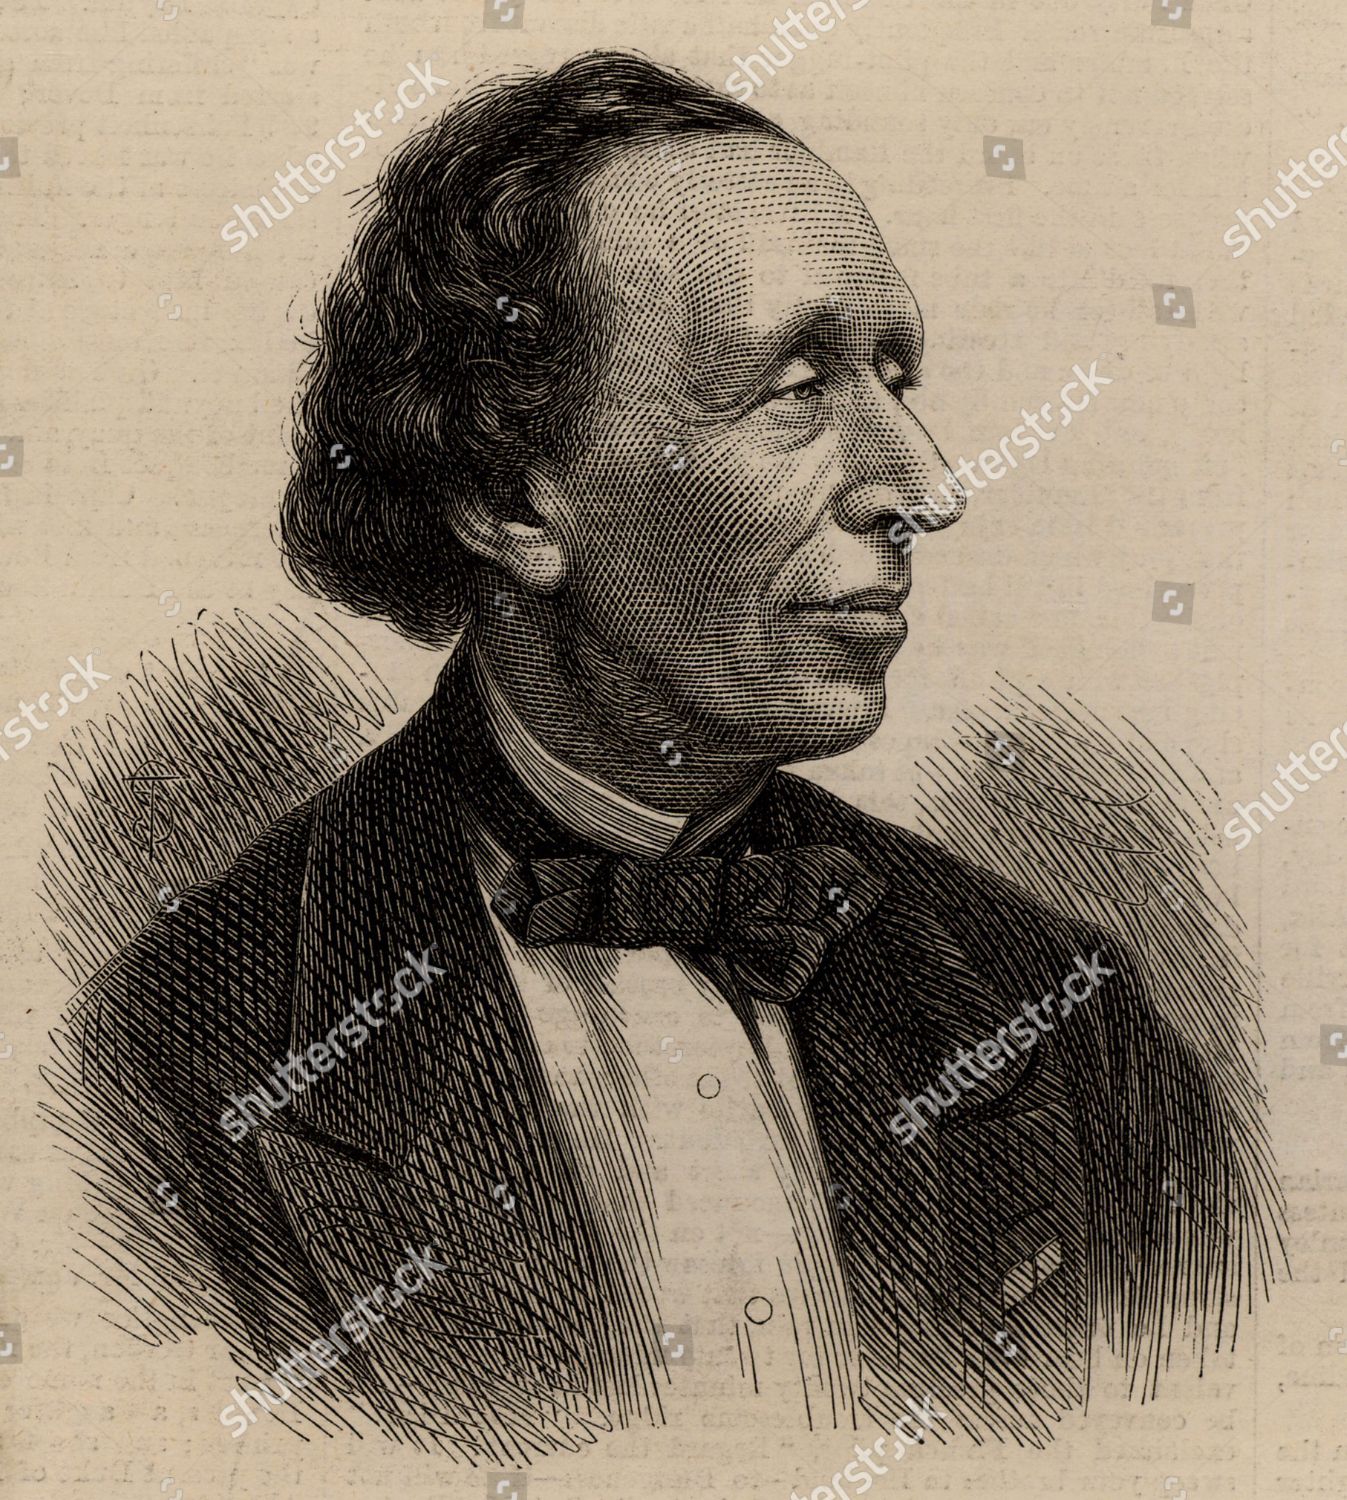 Hans Christian Andersen 1805 - 1875 Editorial Image - Image of